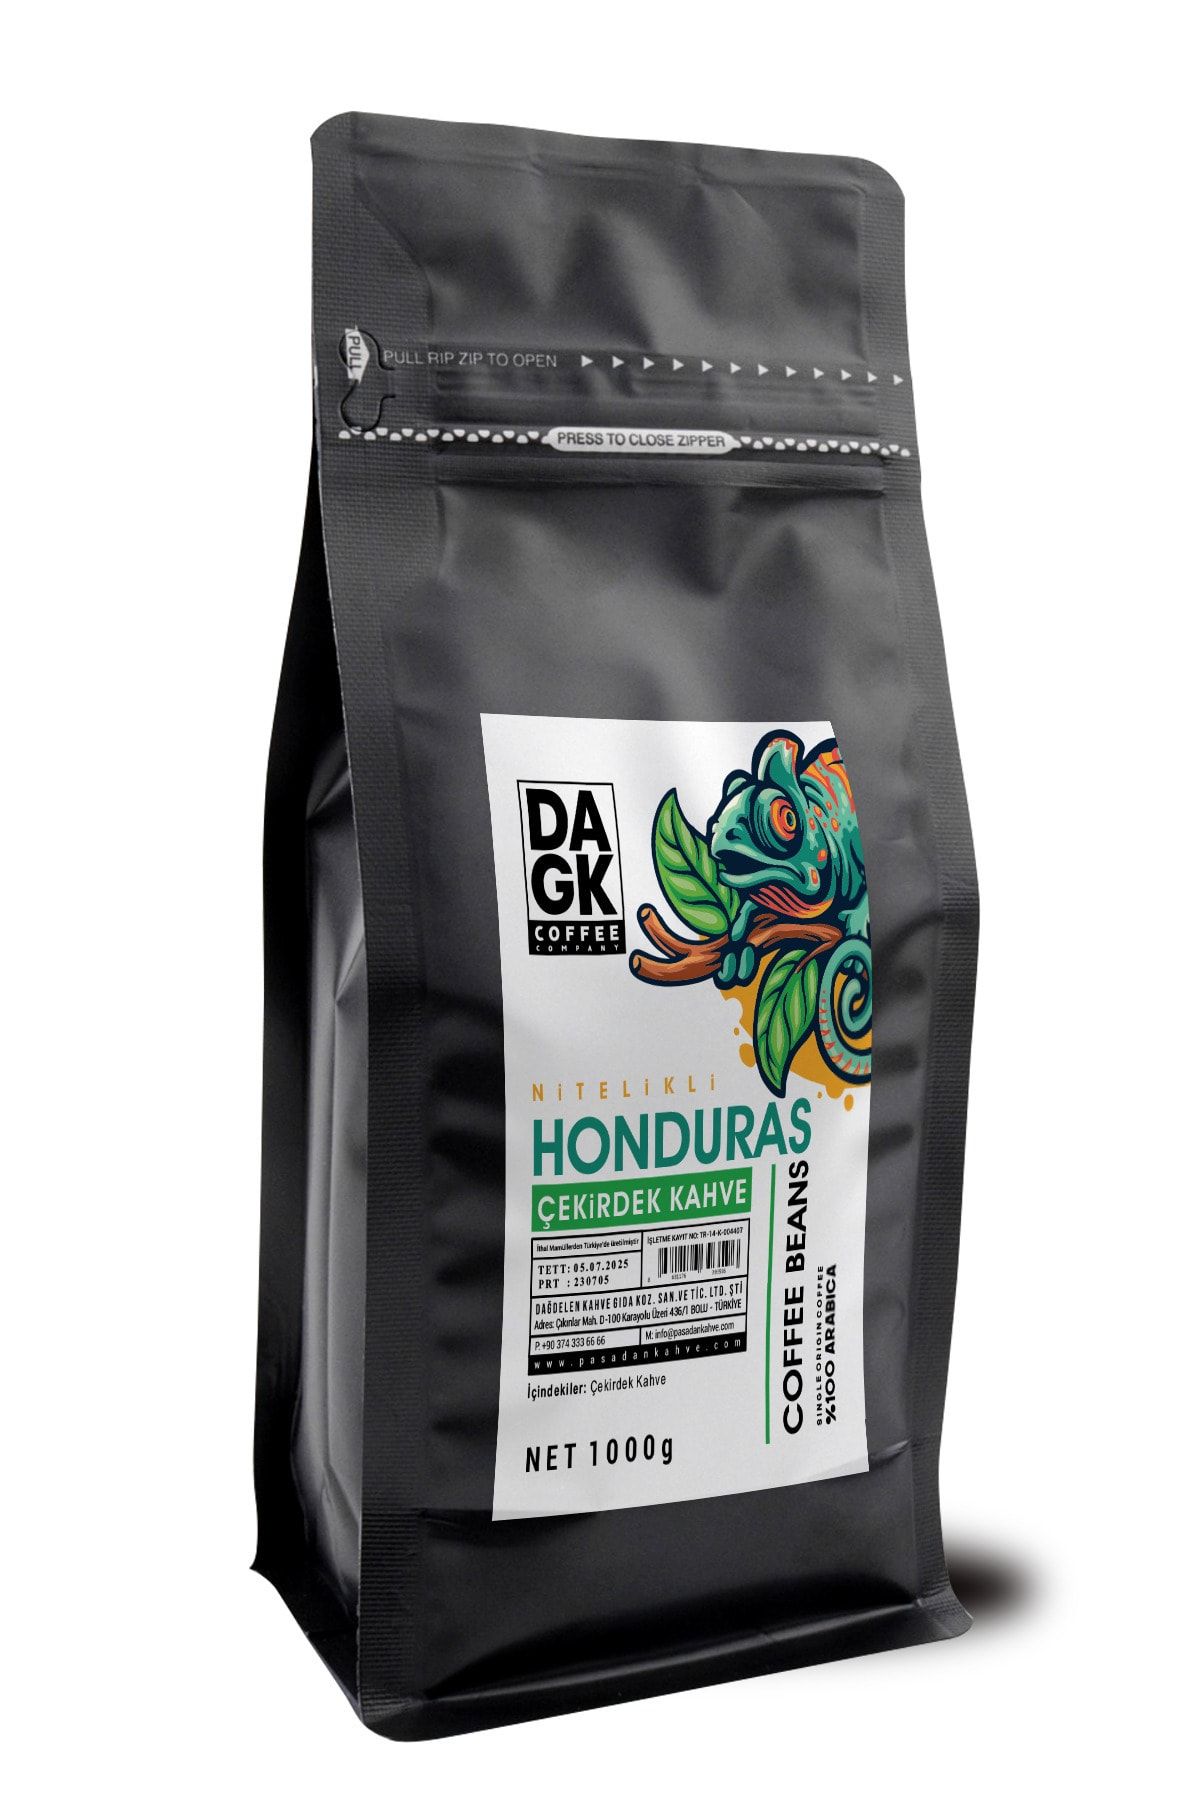 Dagk Honduras Çekirdek Kahve 1000g (%100 Arabica)